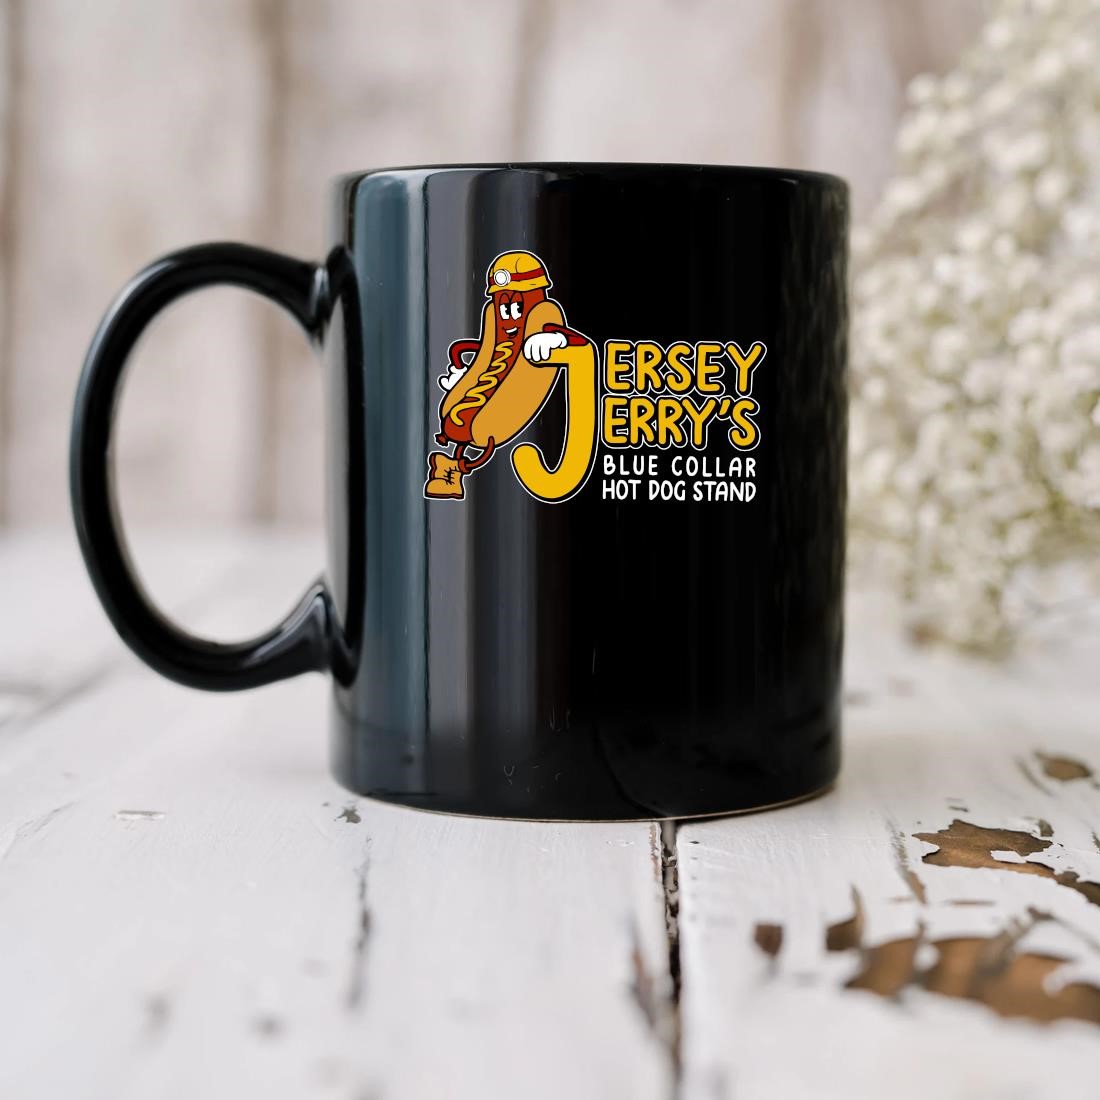 Original Jersey Jerry's Blue Collar Hot Dog Stand Mug biu.jpg